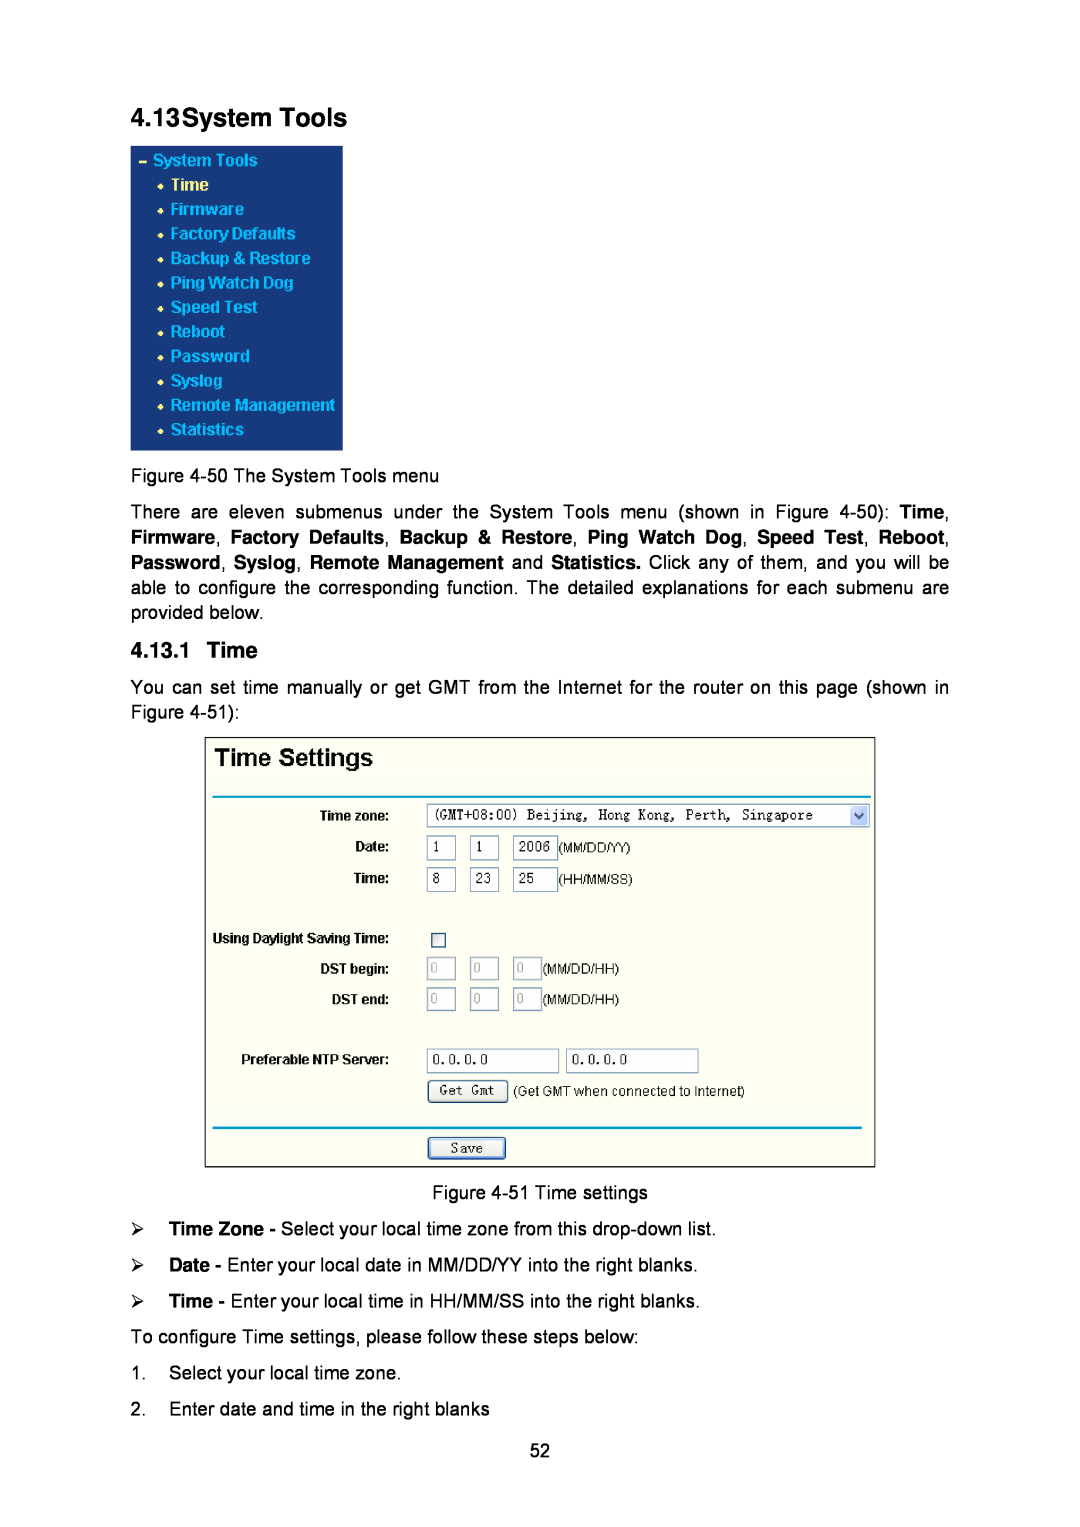 TP-Link TL-WA5110G manual 4.13System Tools, Time 